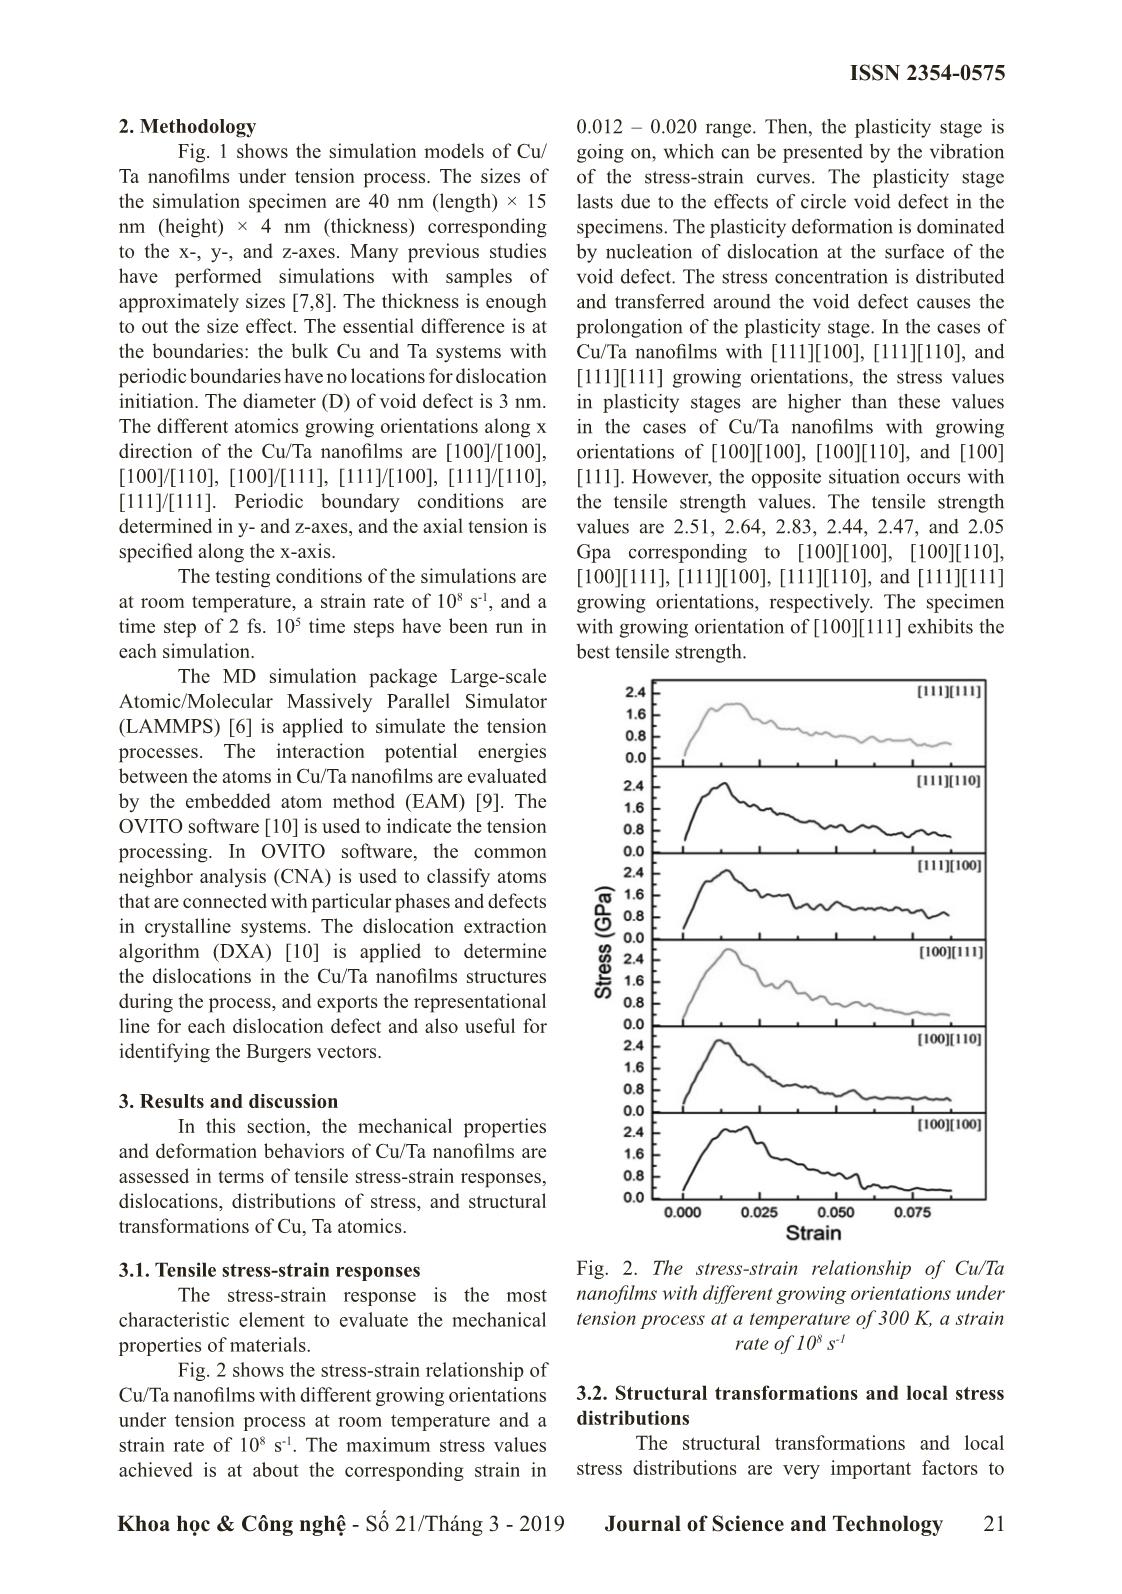 Effects of atomics growing orientation to mechanical properties of Cu/Ta bilayer using molecular dynamics simulation trang 2